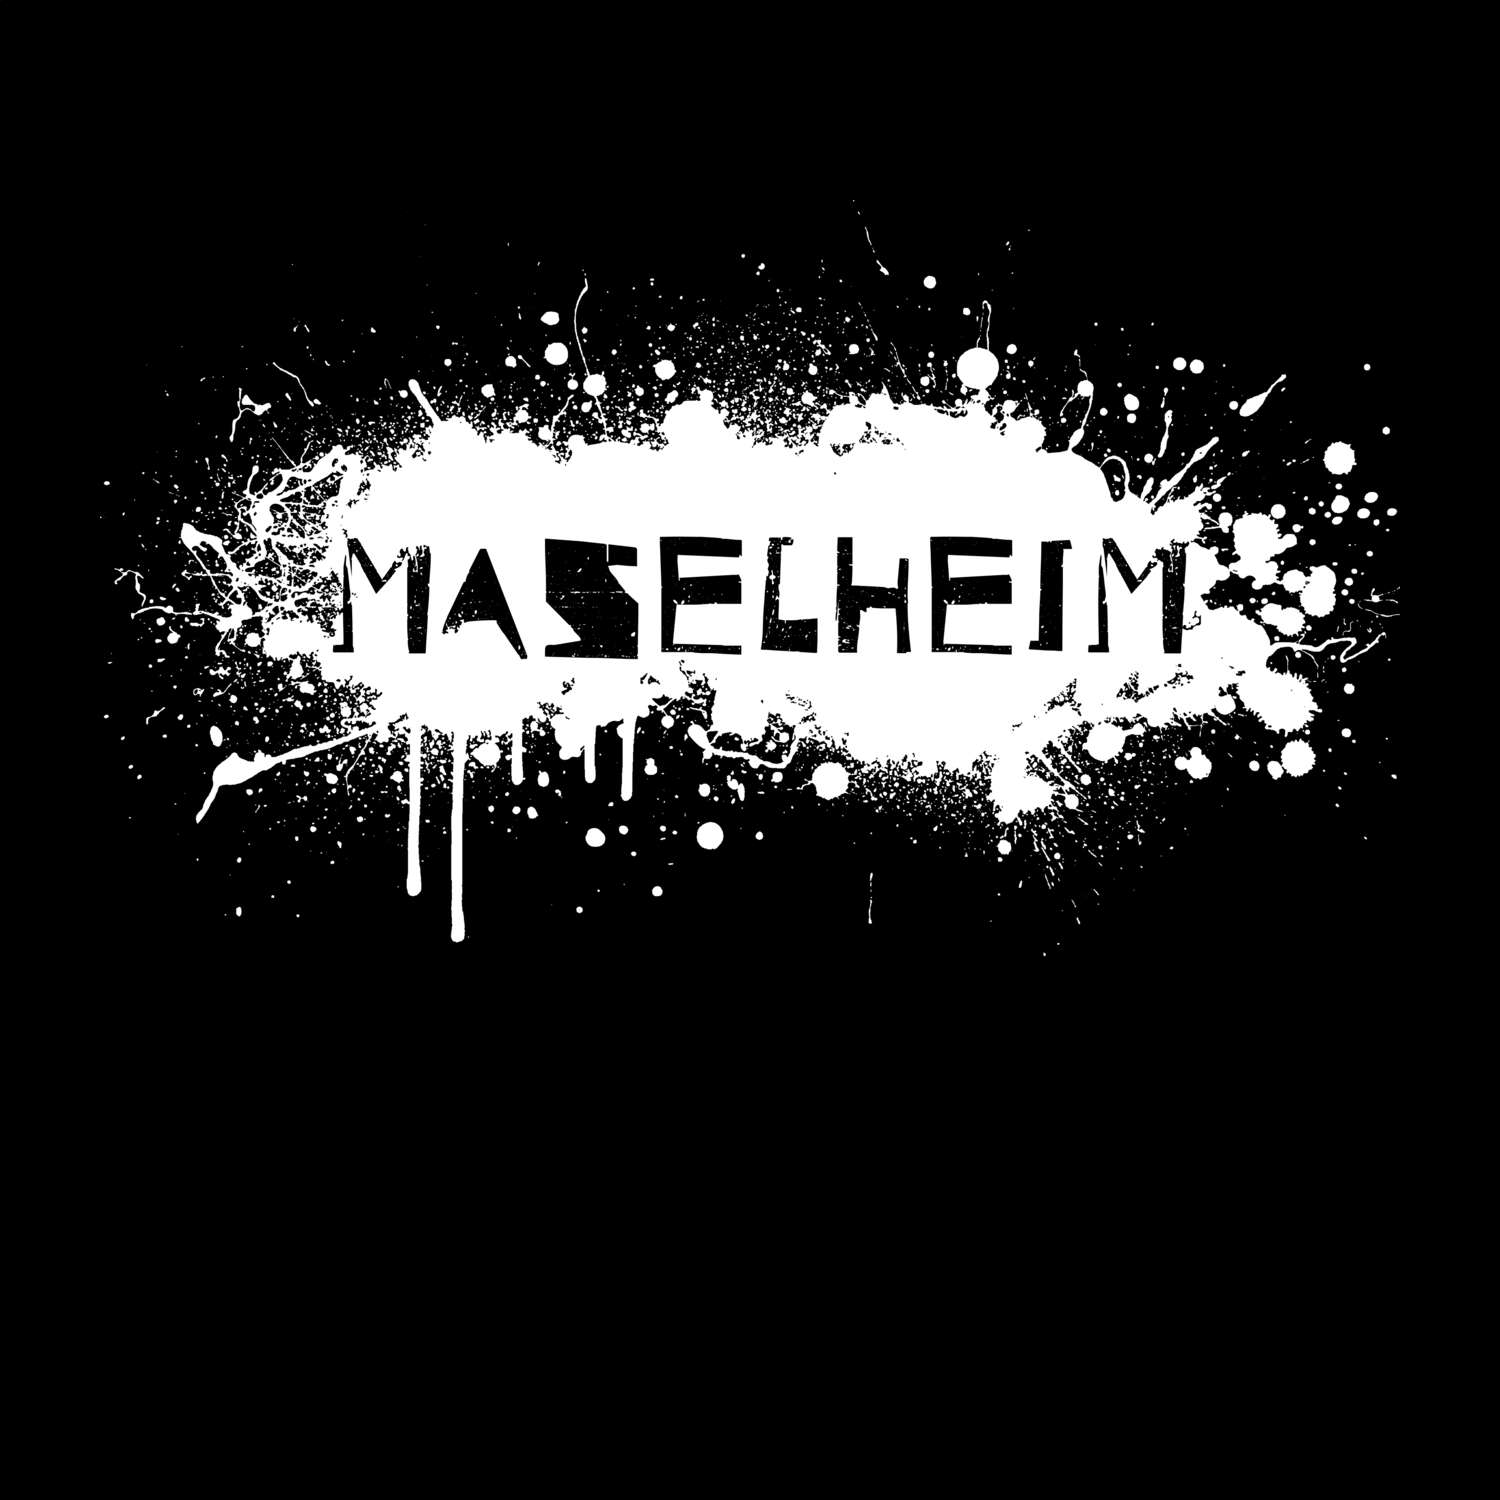 Maselheim T-Shirt »Paint Splash Punk«